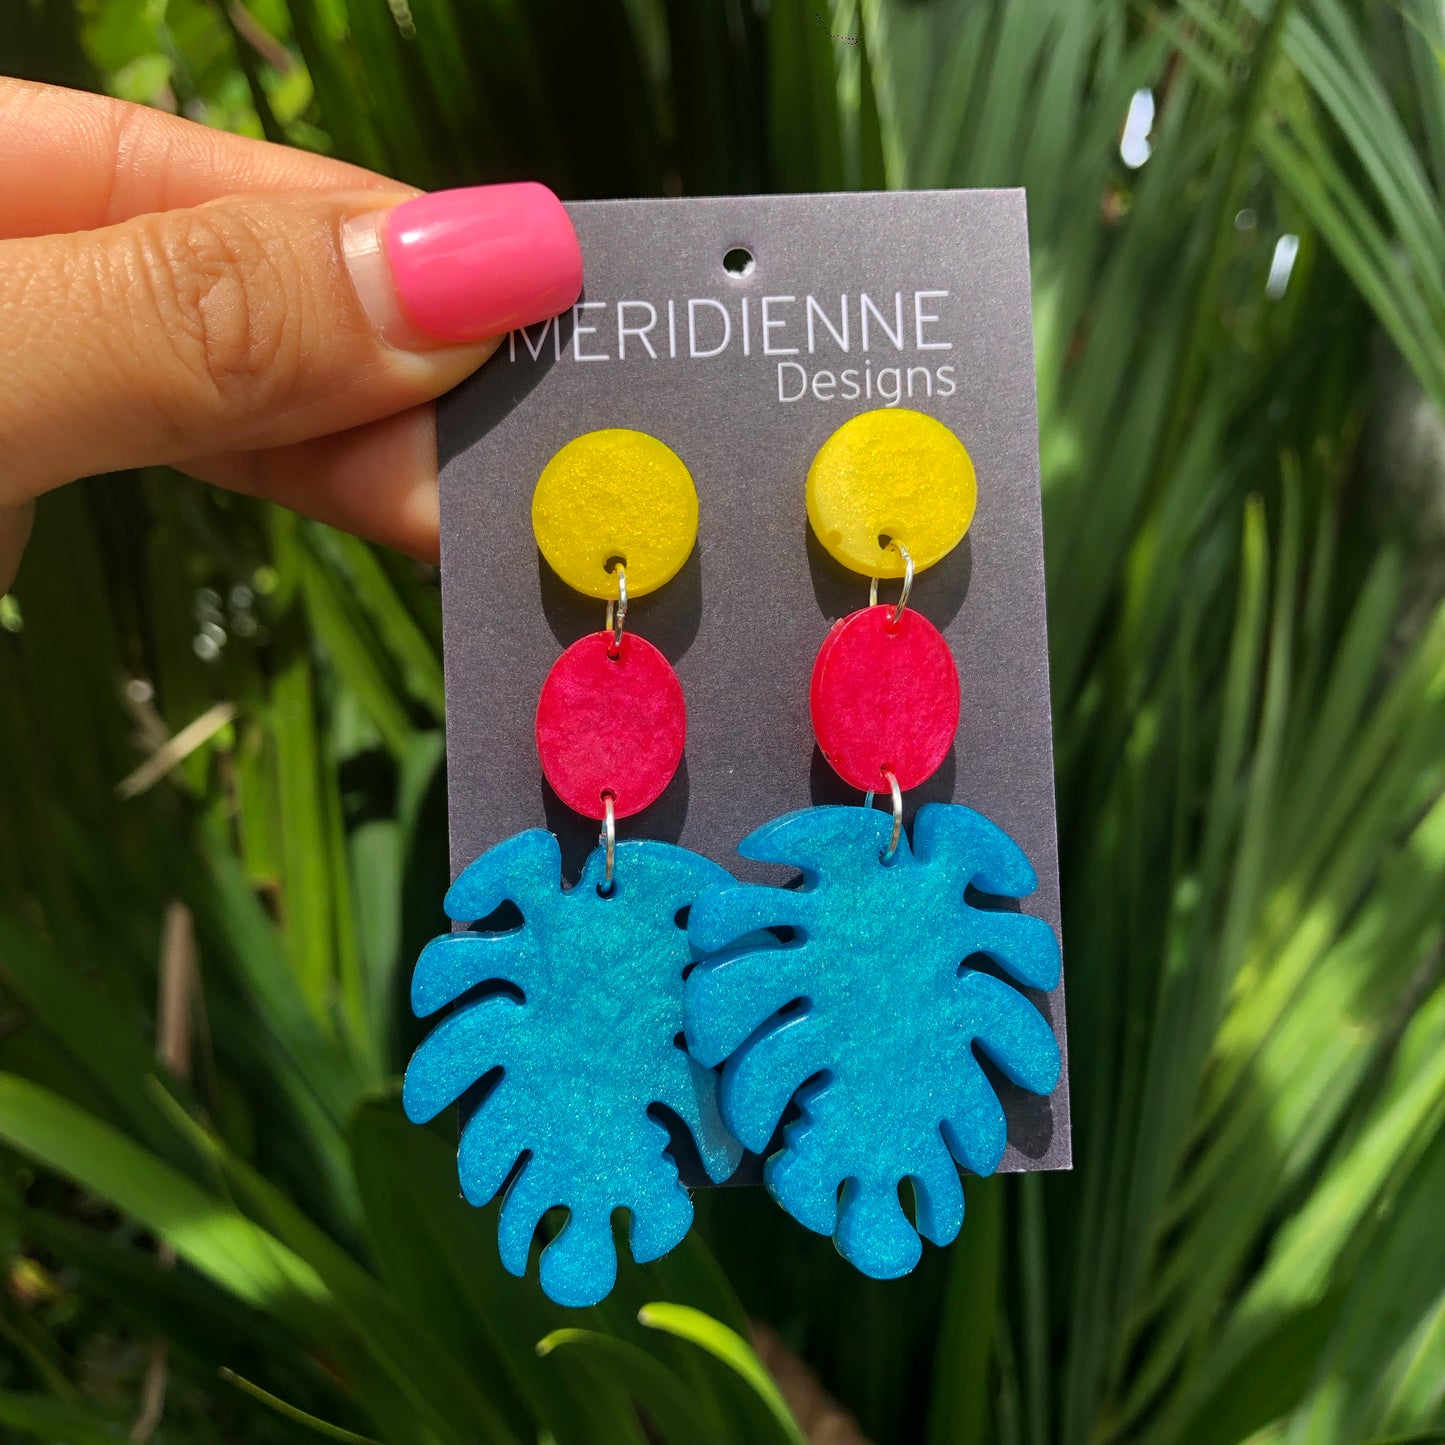 Turquoise resin earrings